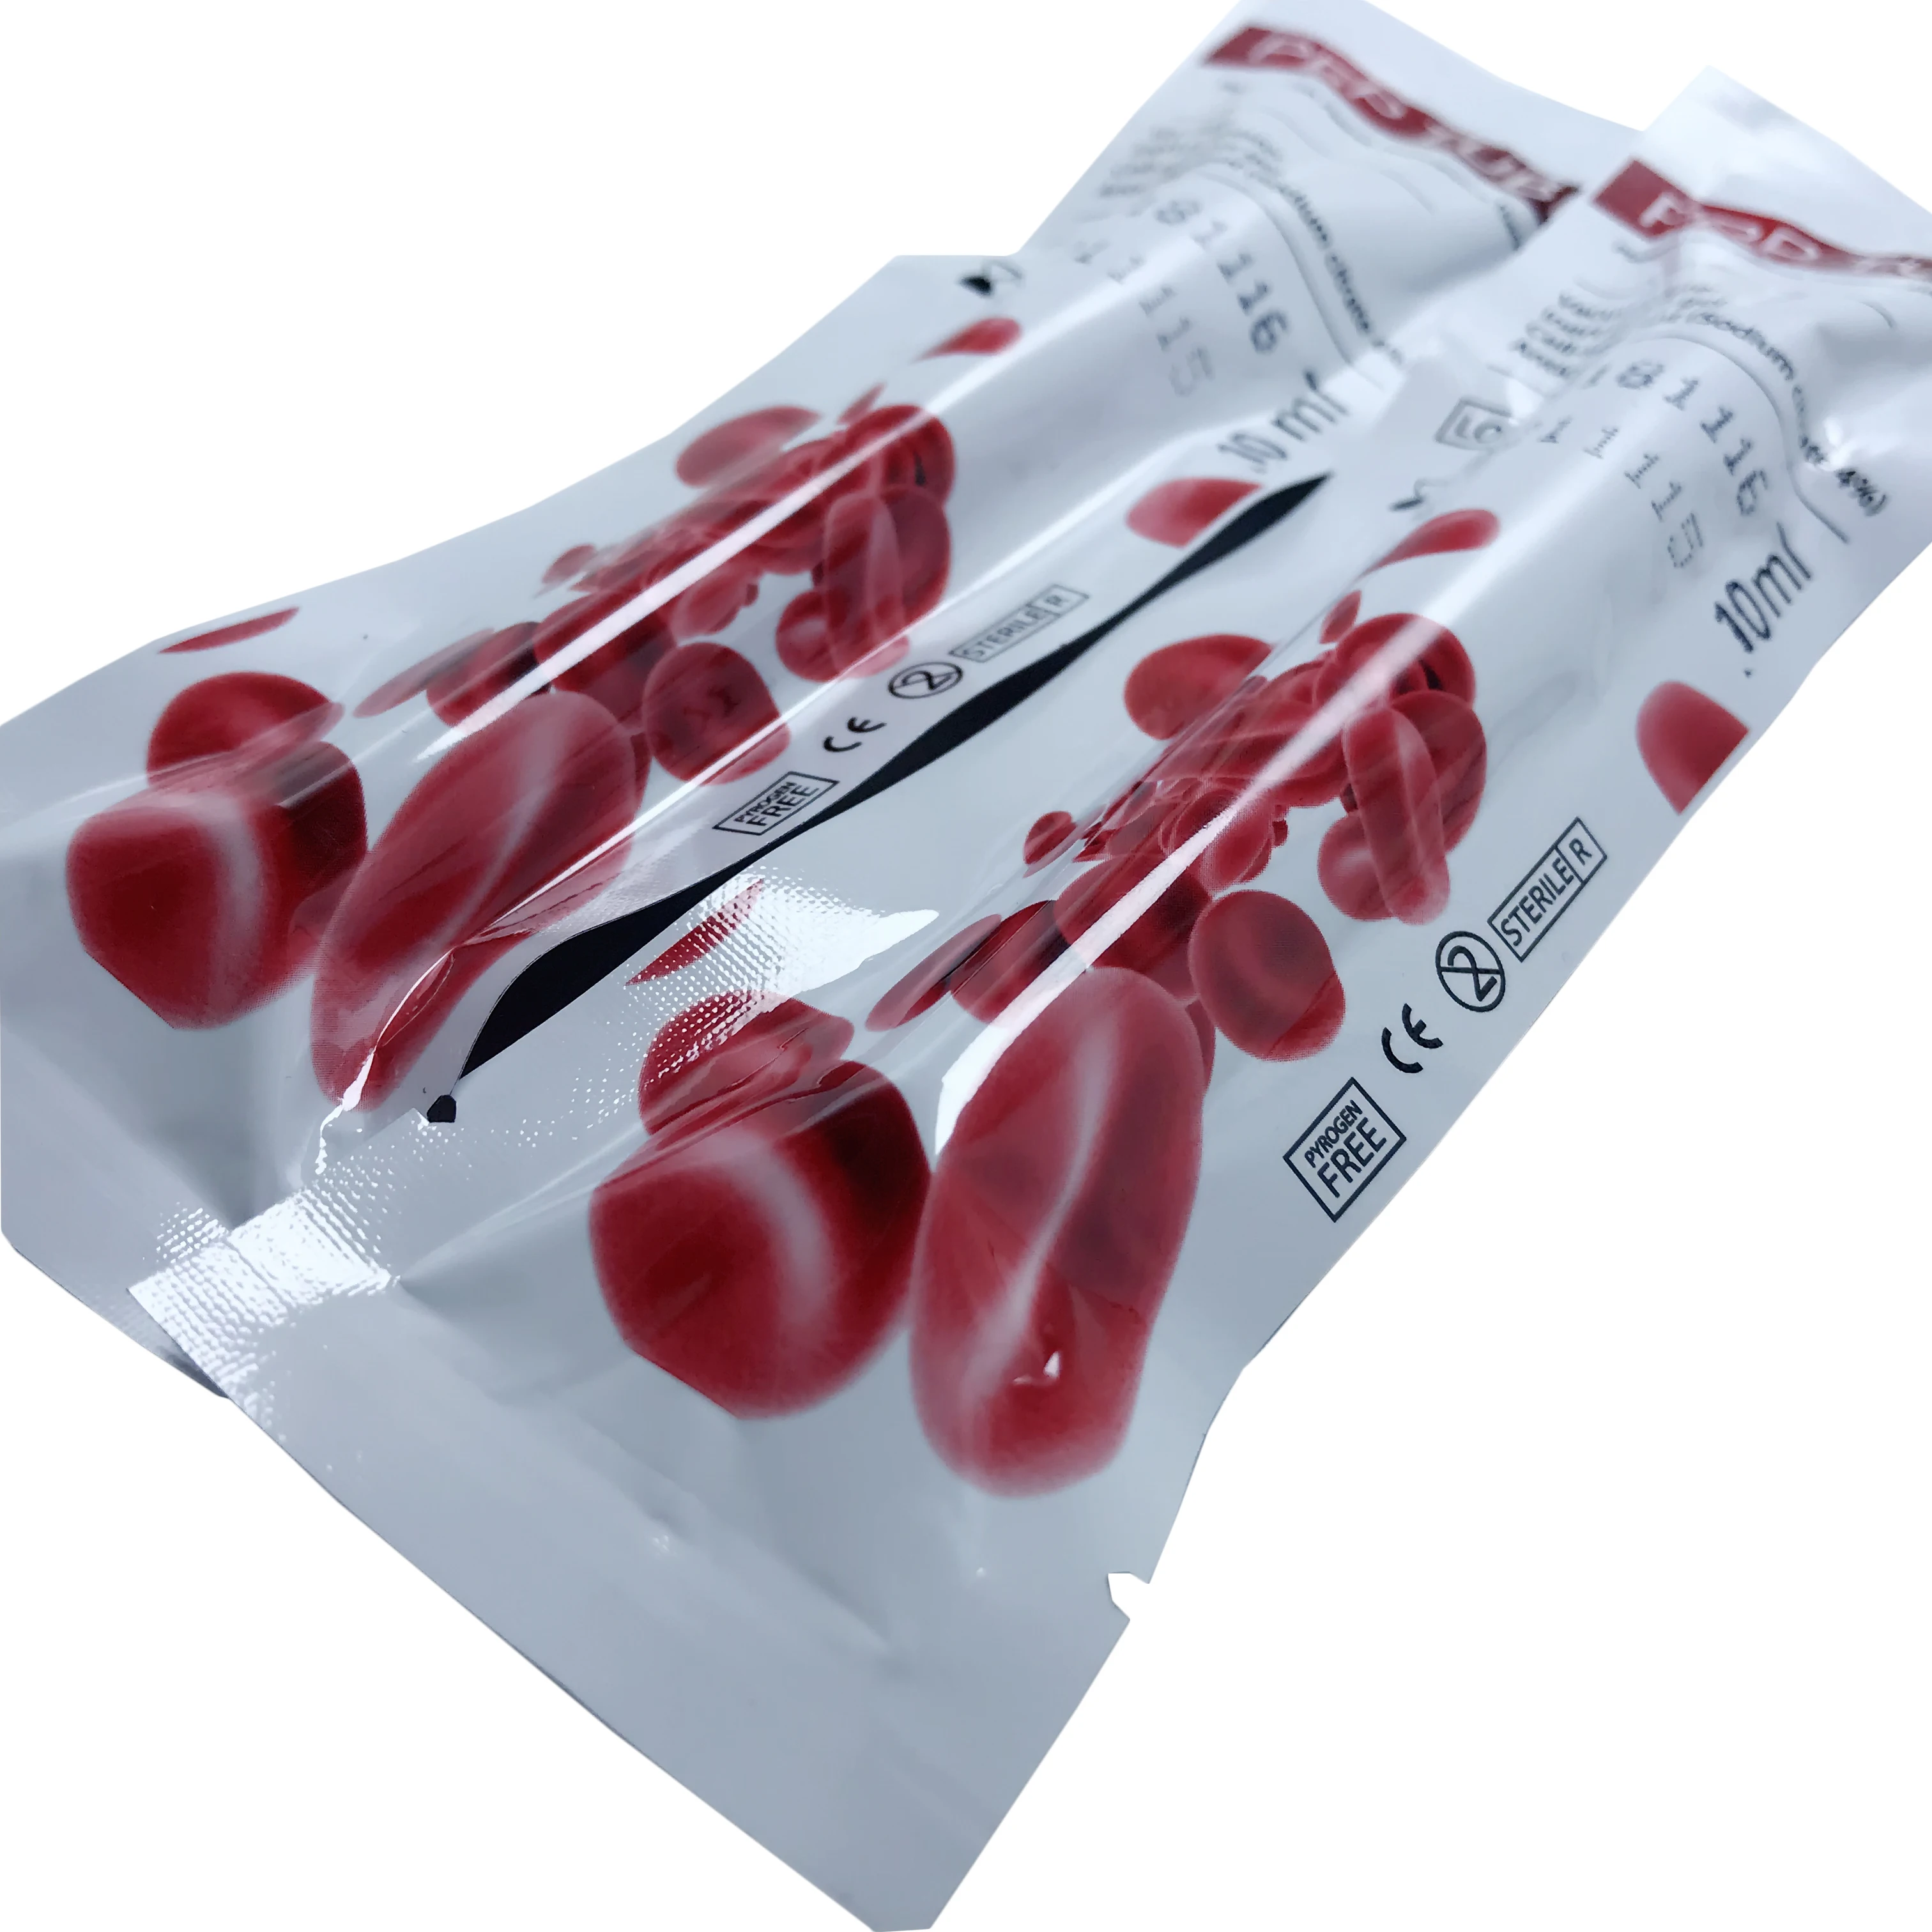 Hot sales 15ml platelet rich plasma ycellbio prp tube with gel